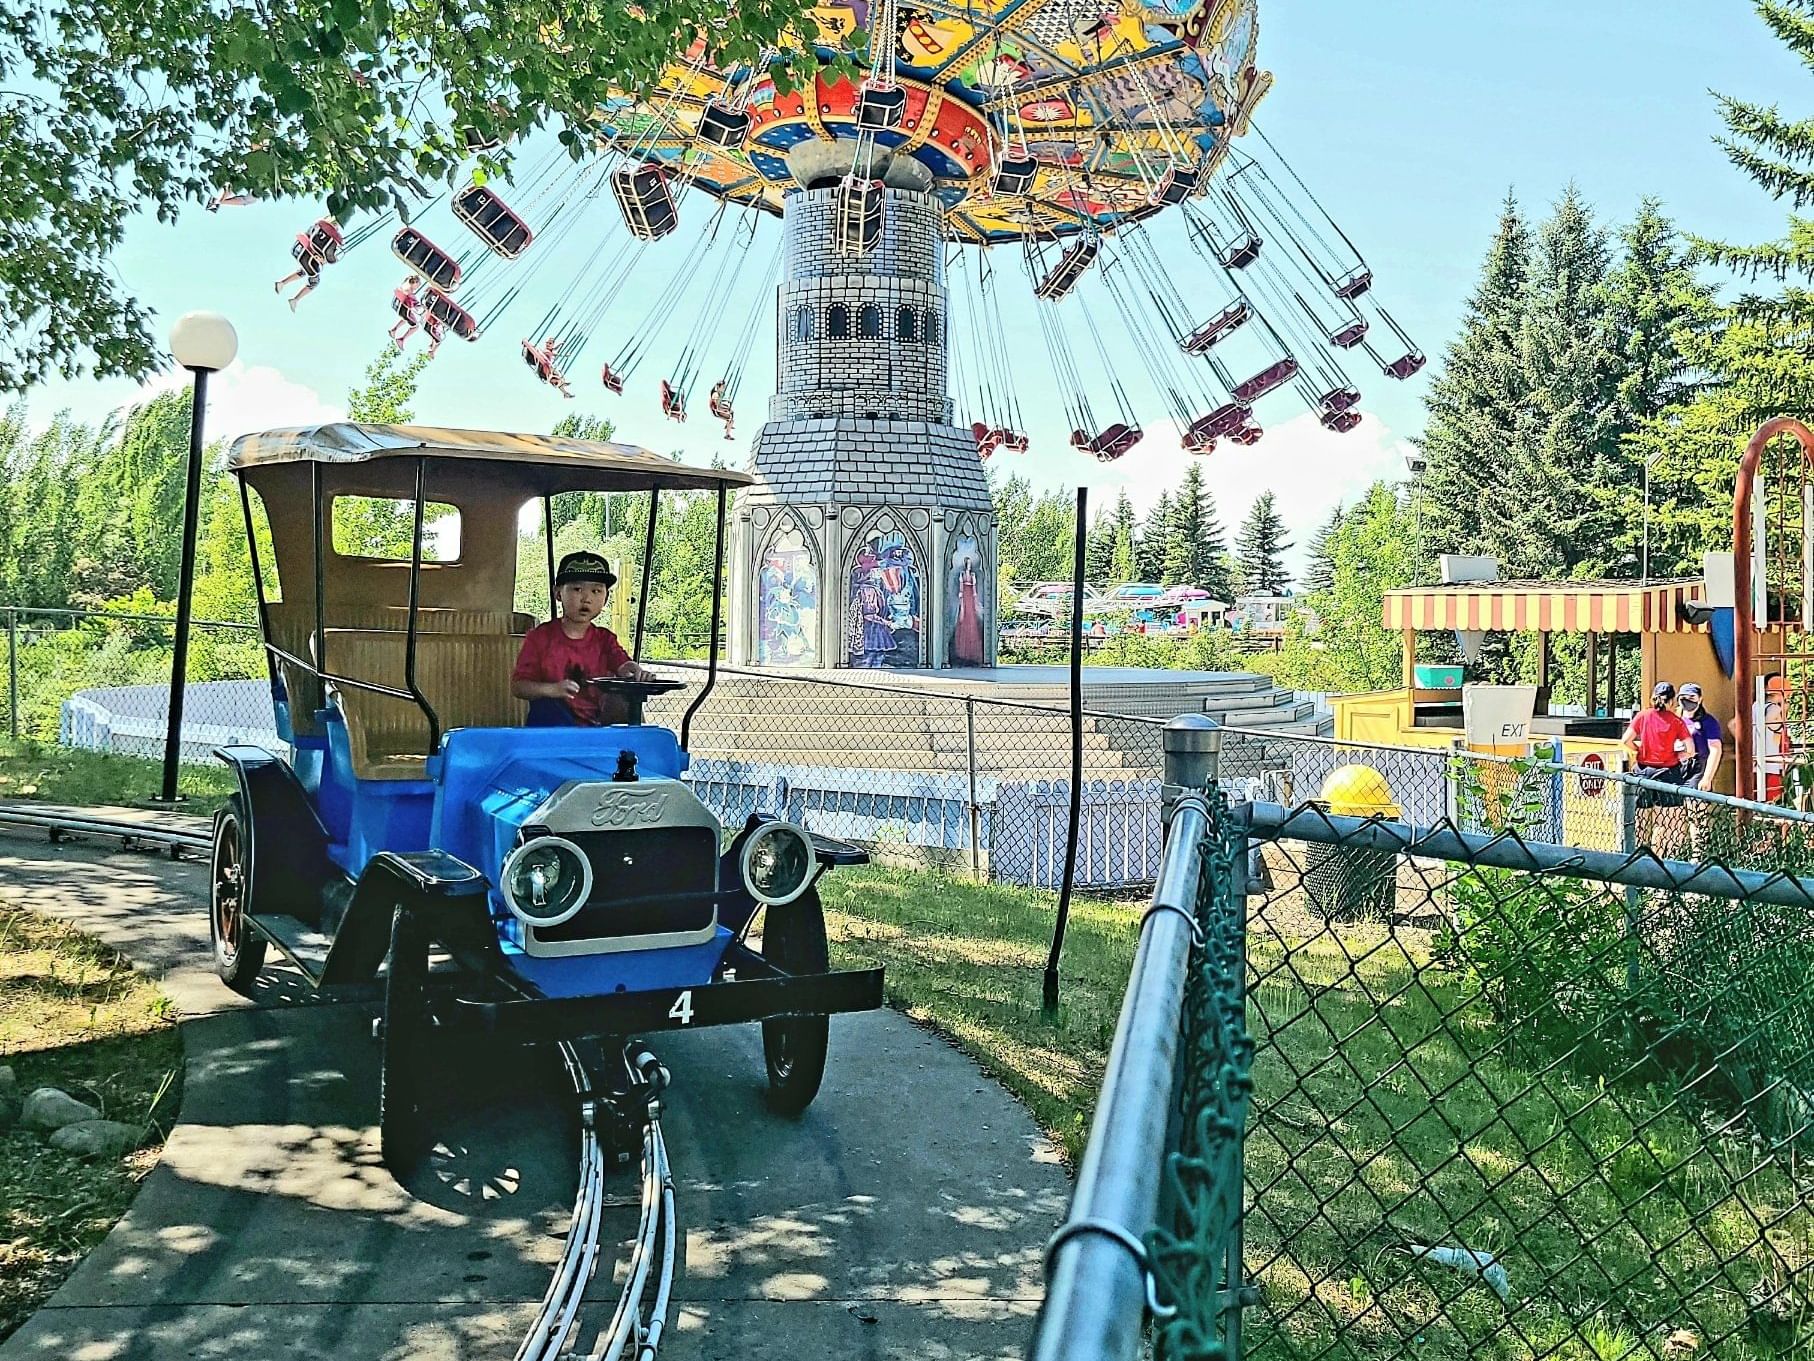 A little boy enjoying the Calaway Amusement Park near Applause Hotel Calgary